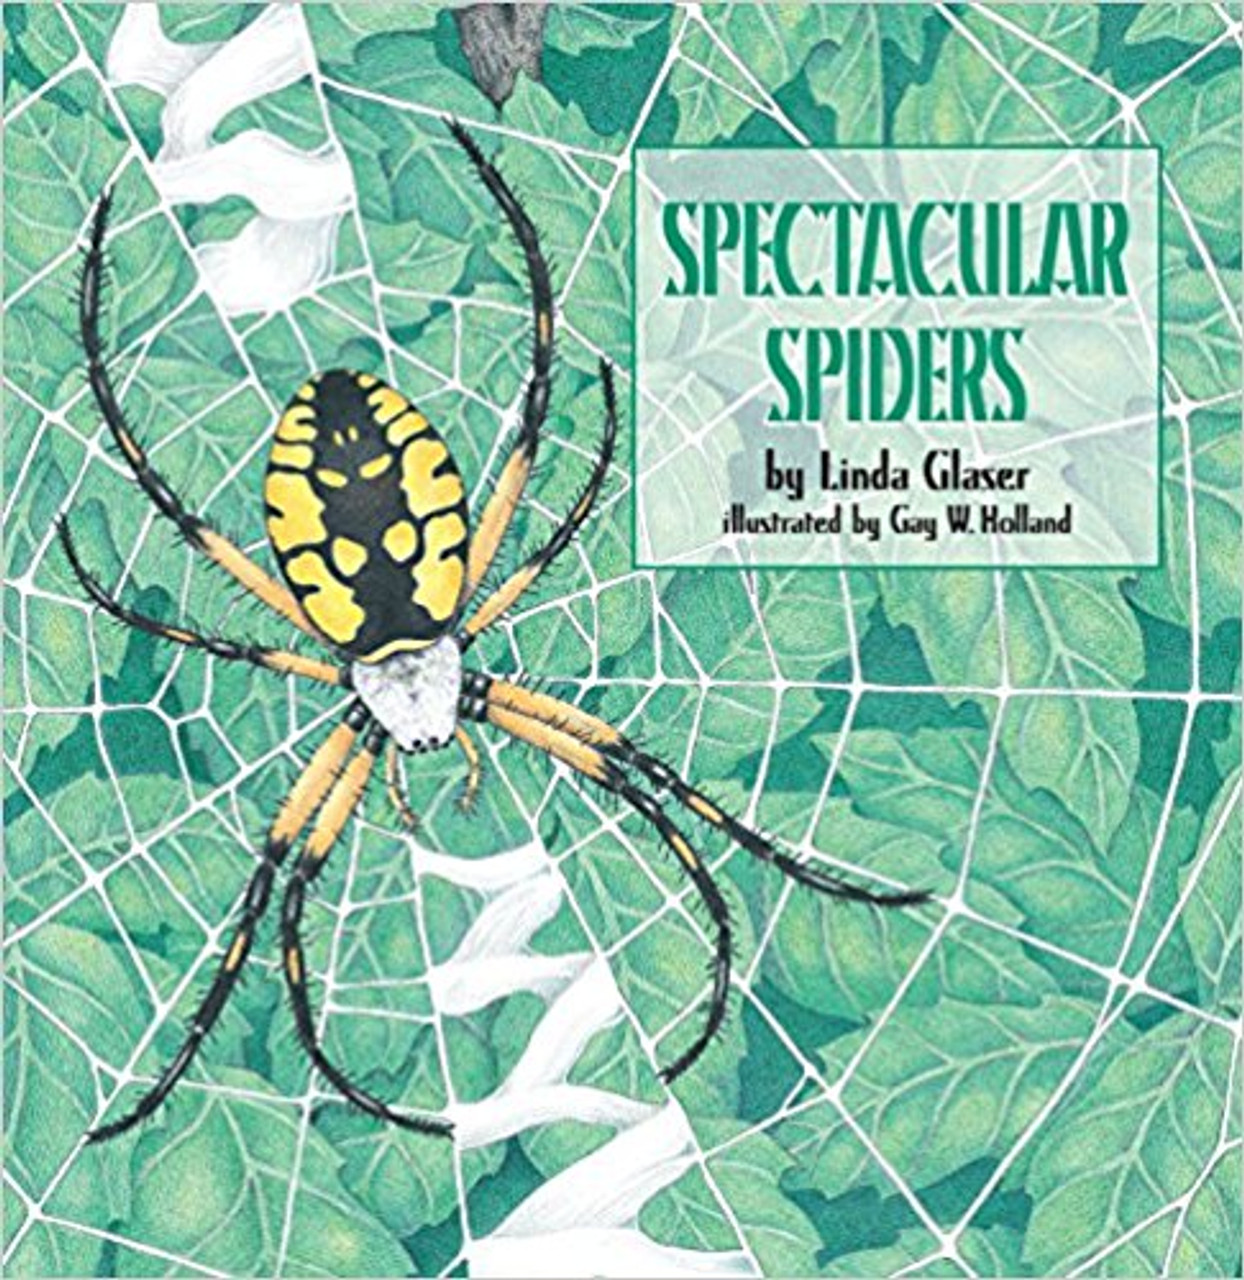 Spectacular Spiders by Linda Glaser